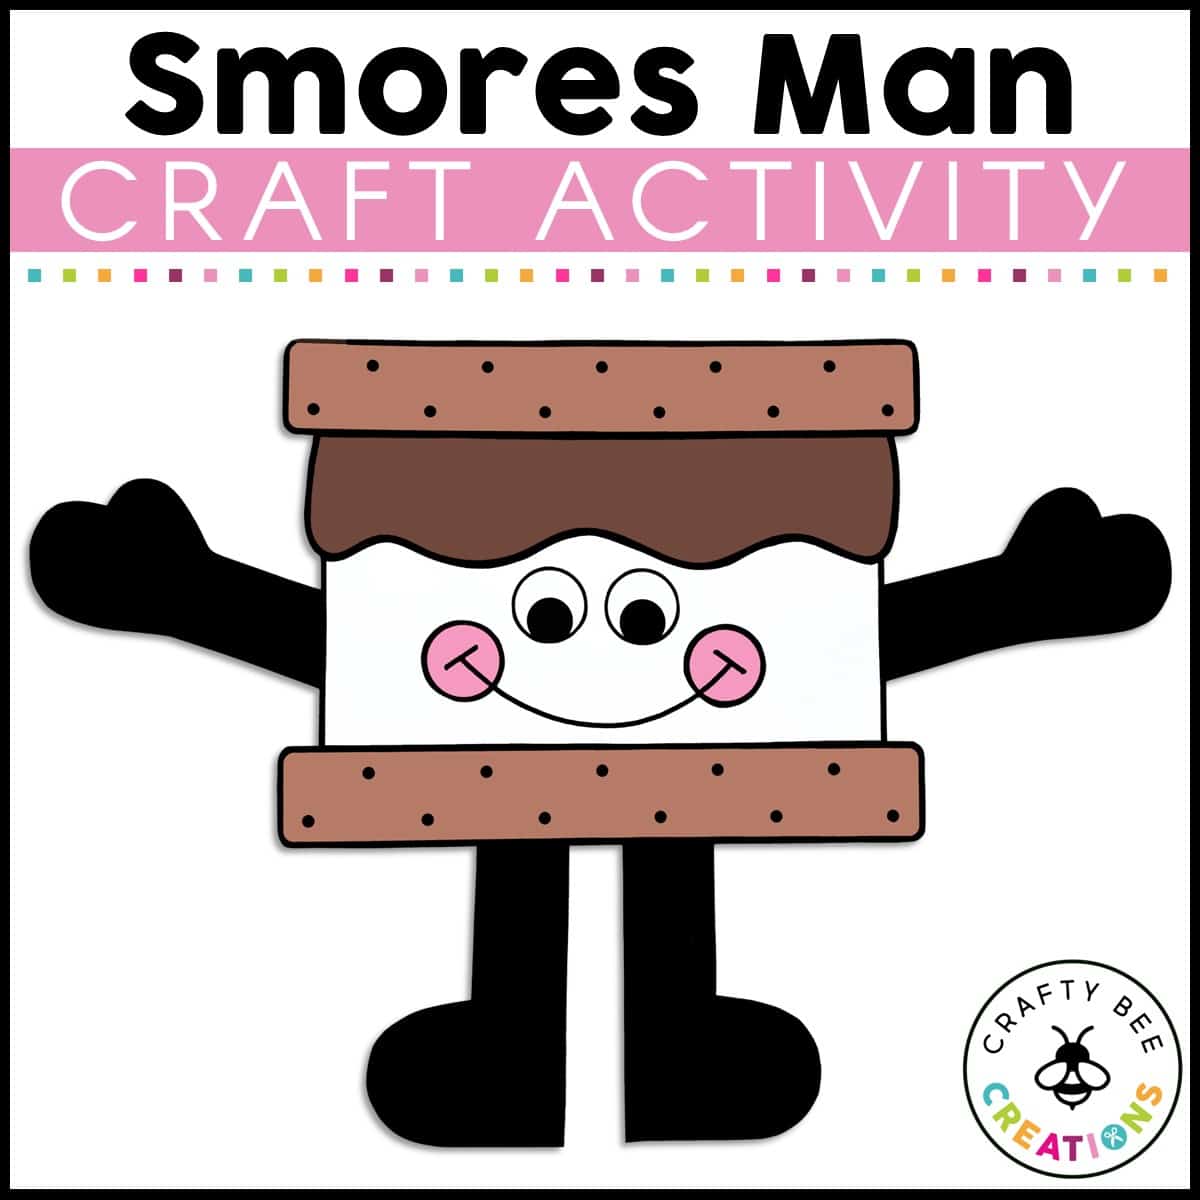 Smores craft activity